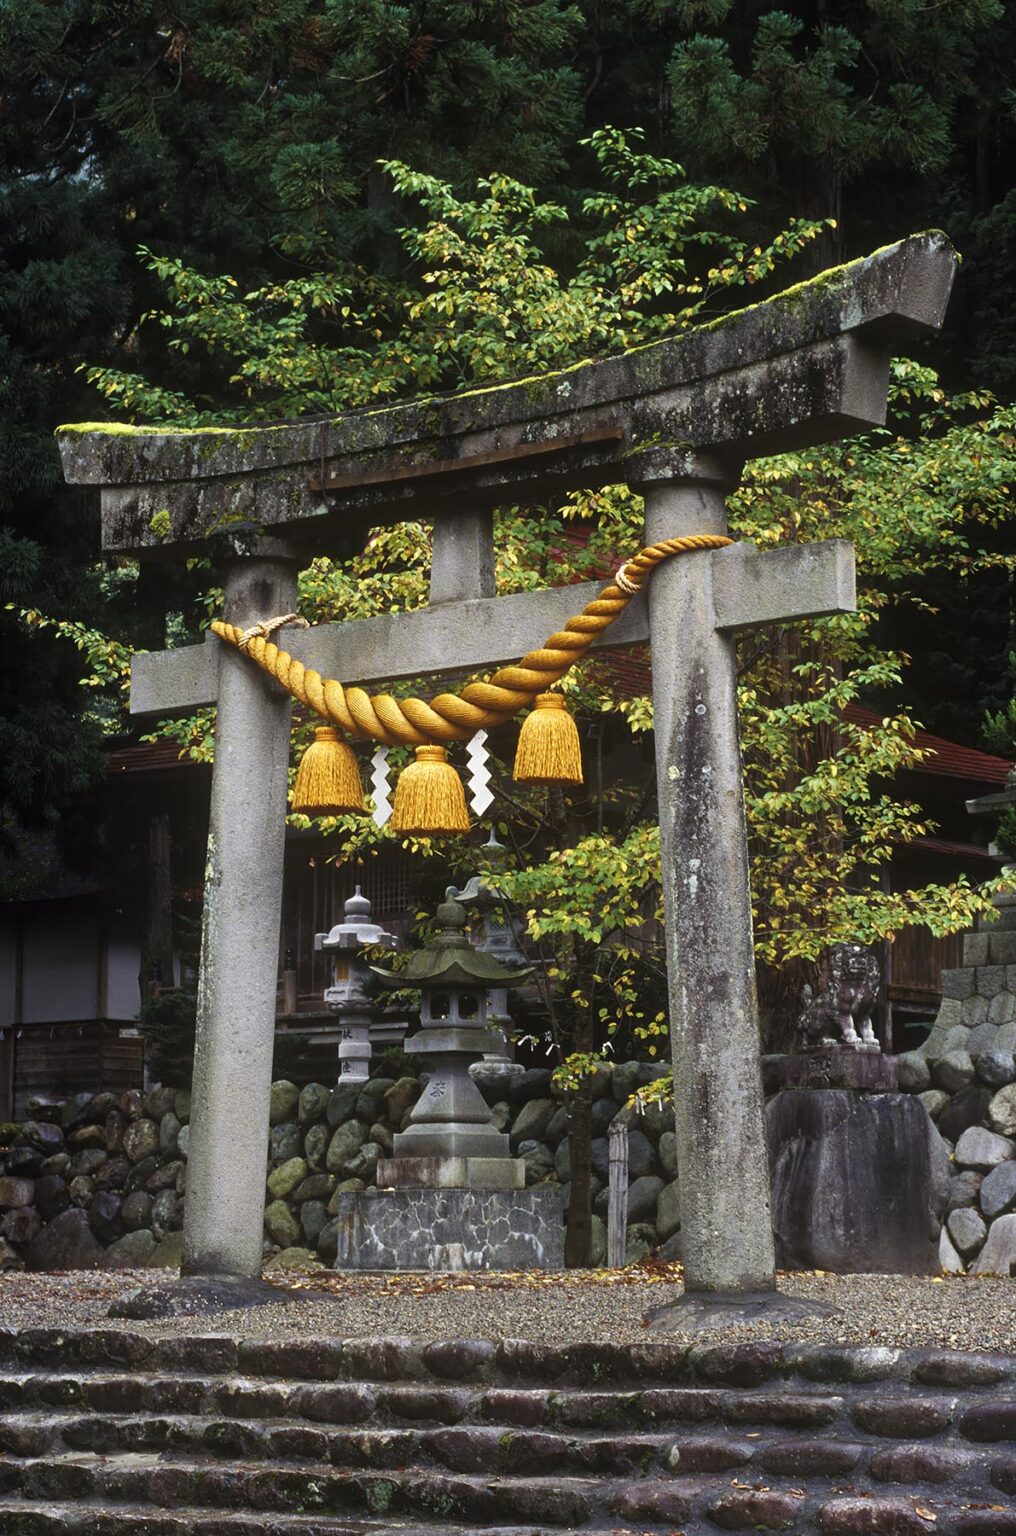 A TORI GATE which is part of a HACHIMAN JINGO SHRINE (SHINTO) - OGAMACHI, JAPAN